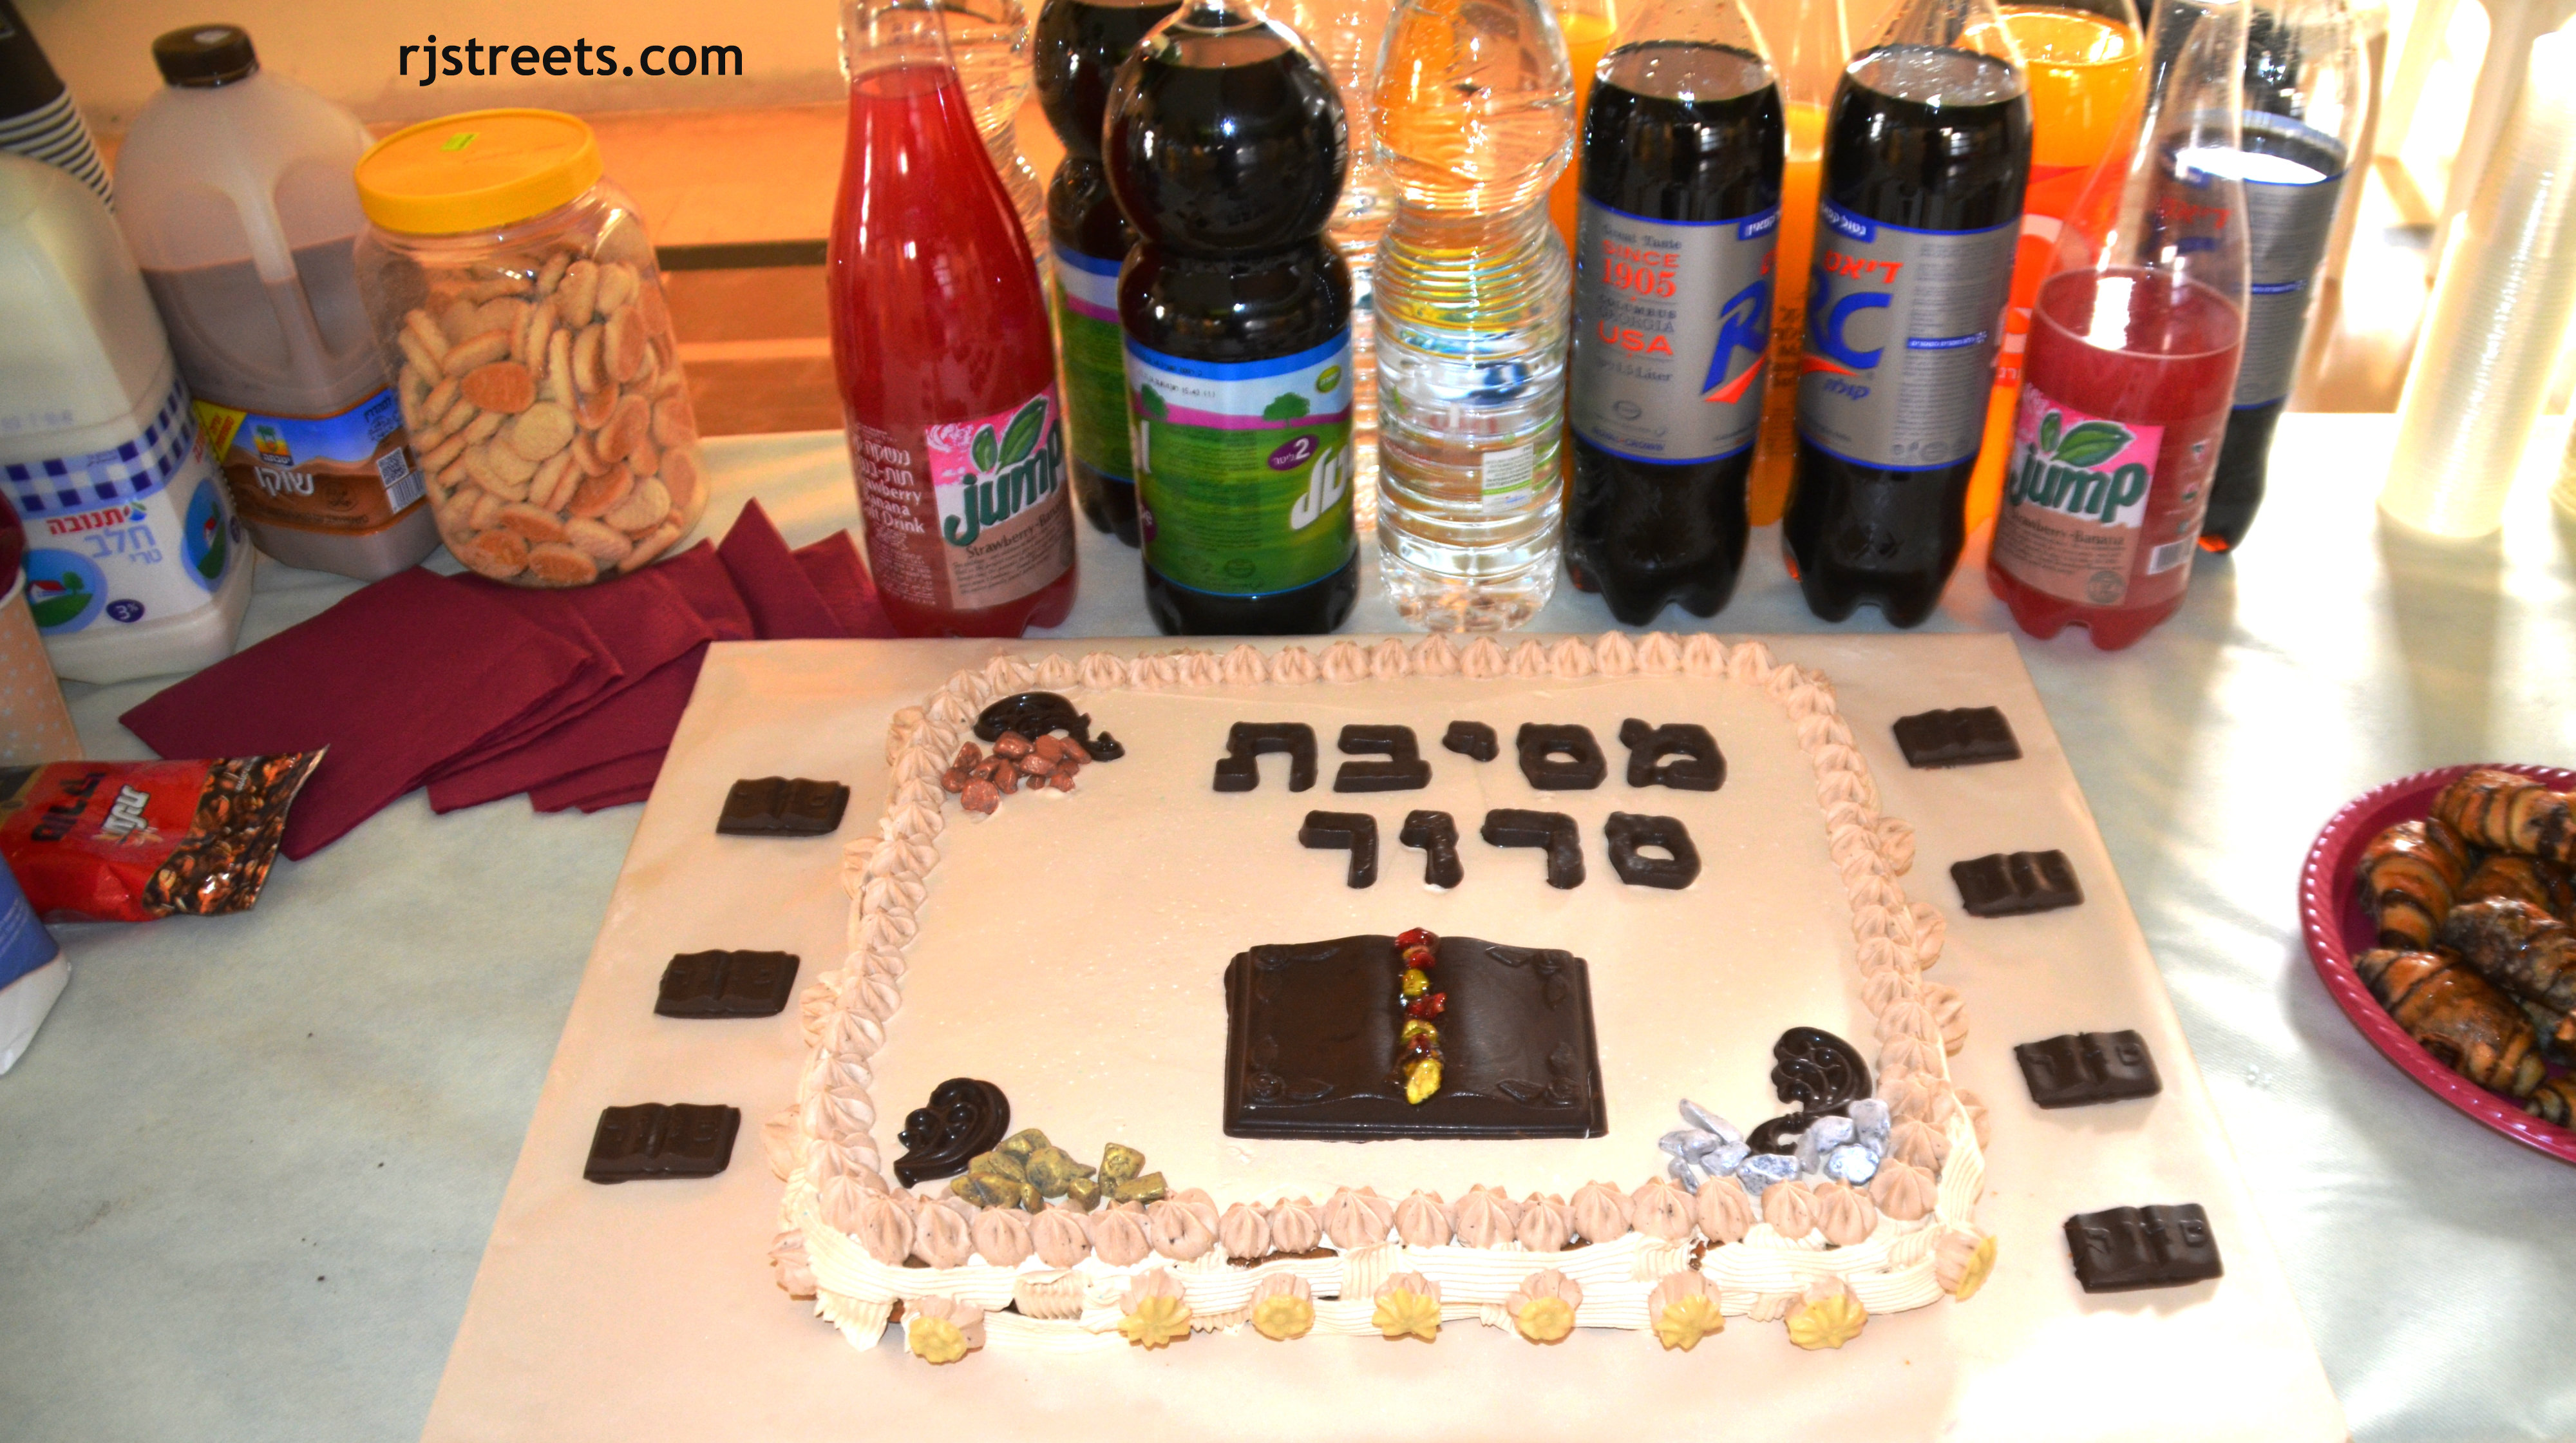 image sidur party, photo mesibat siddur, picture decorated cake